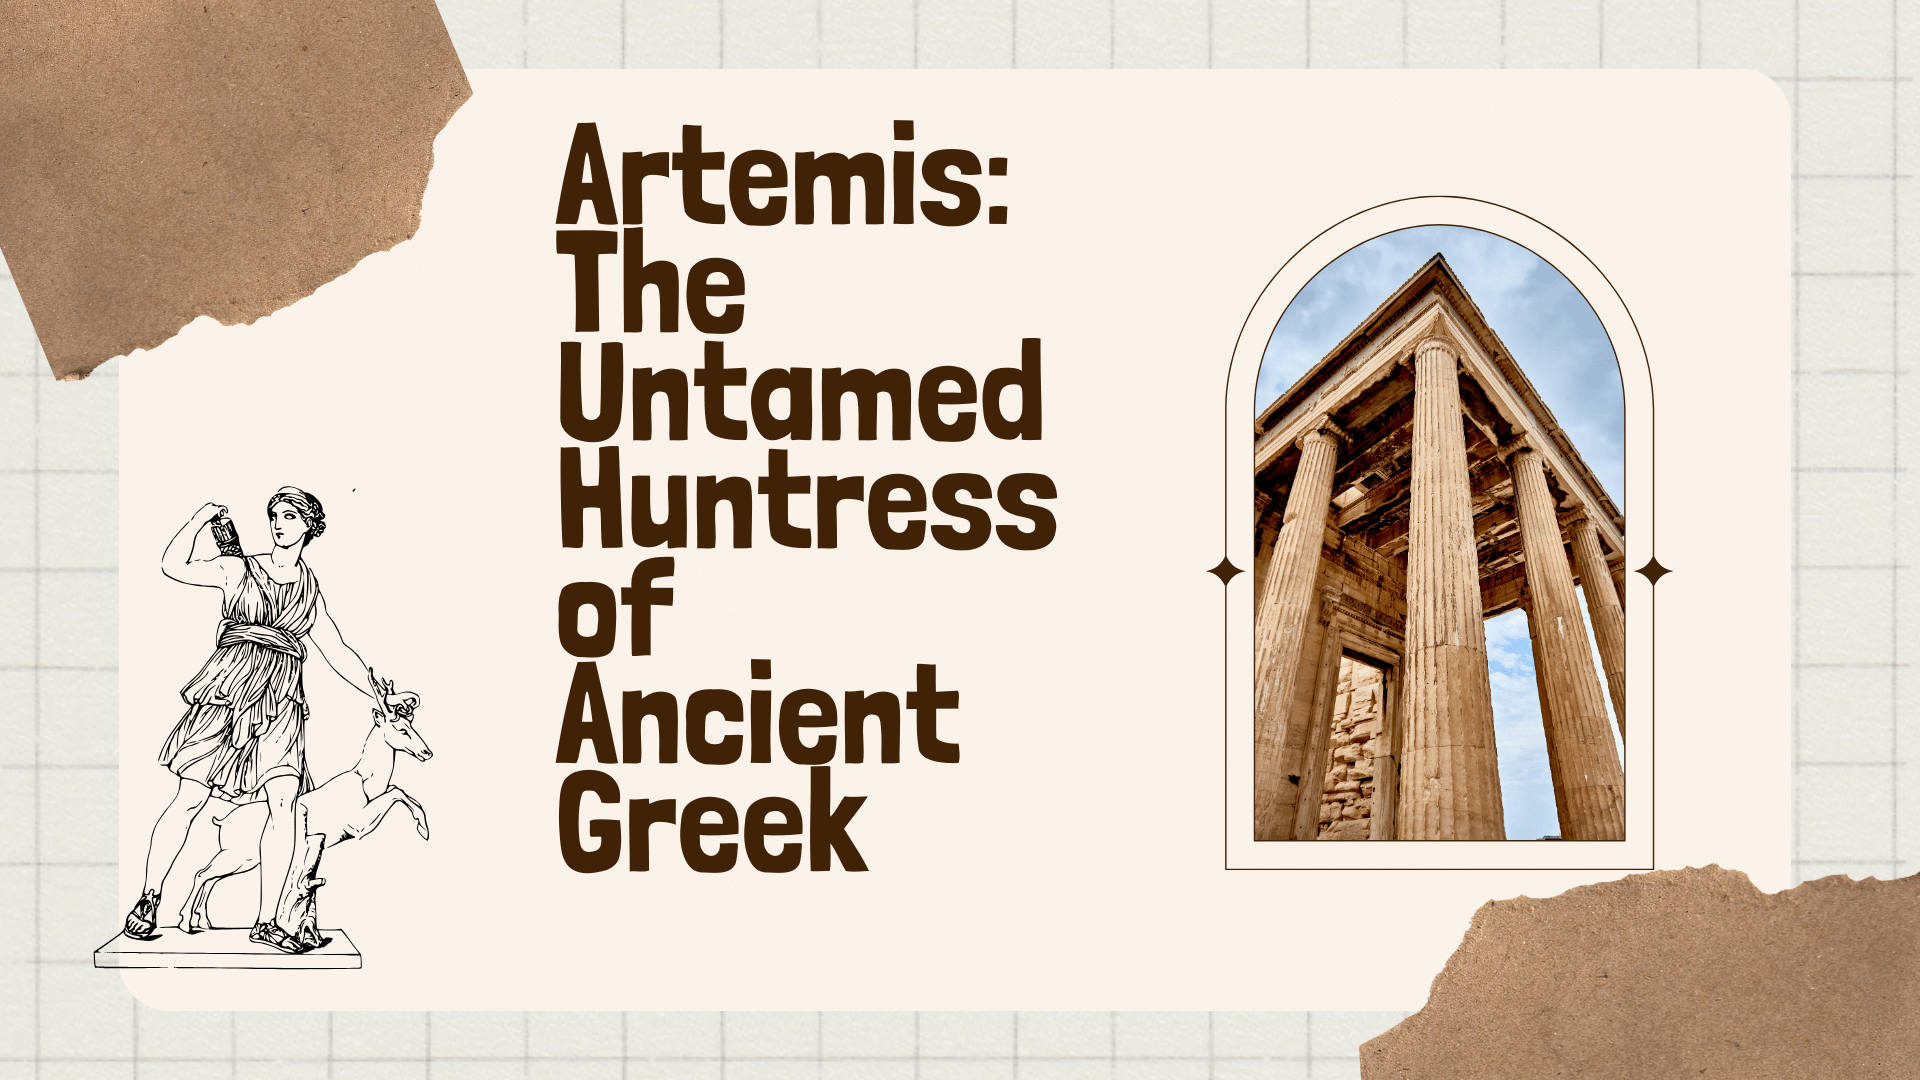 Artemis: The Untamed Huntress of Ancient Greek